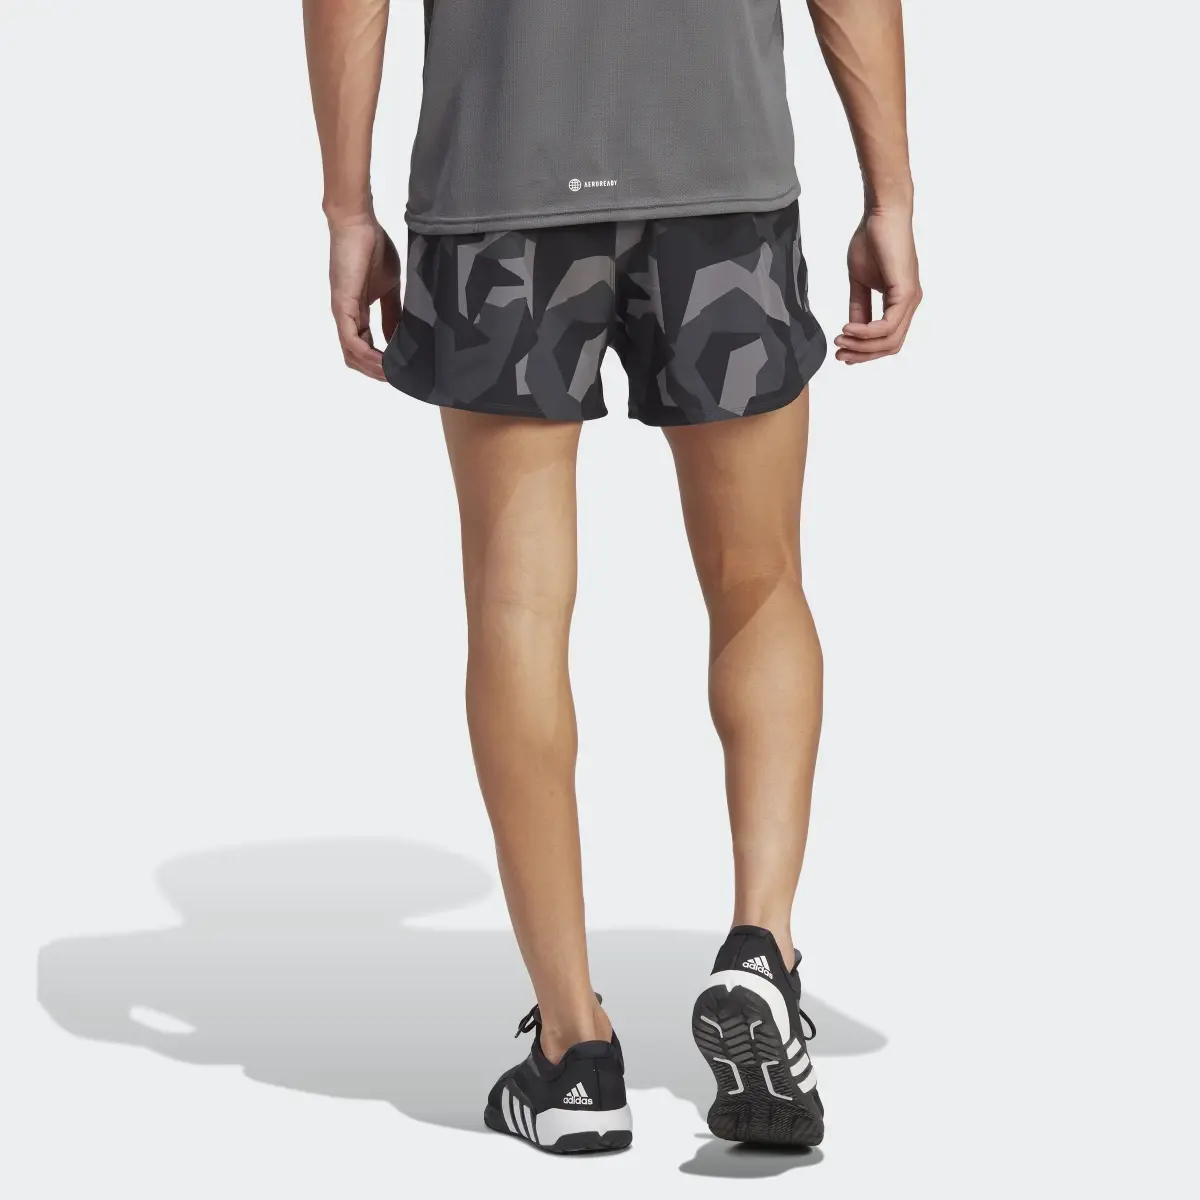 Adidas Shorts Designed for Training Pro Series Strength. 3